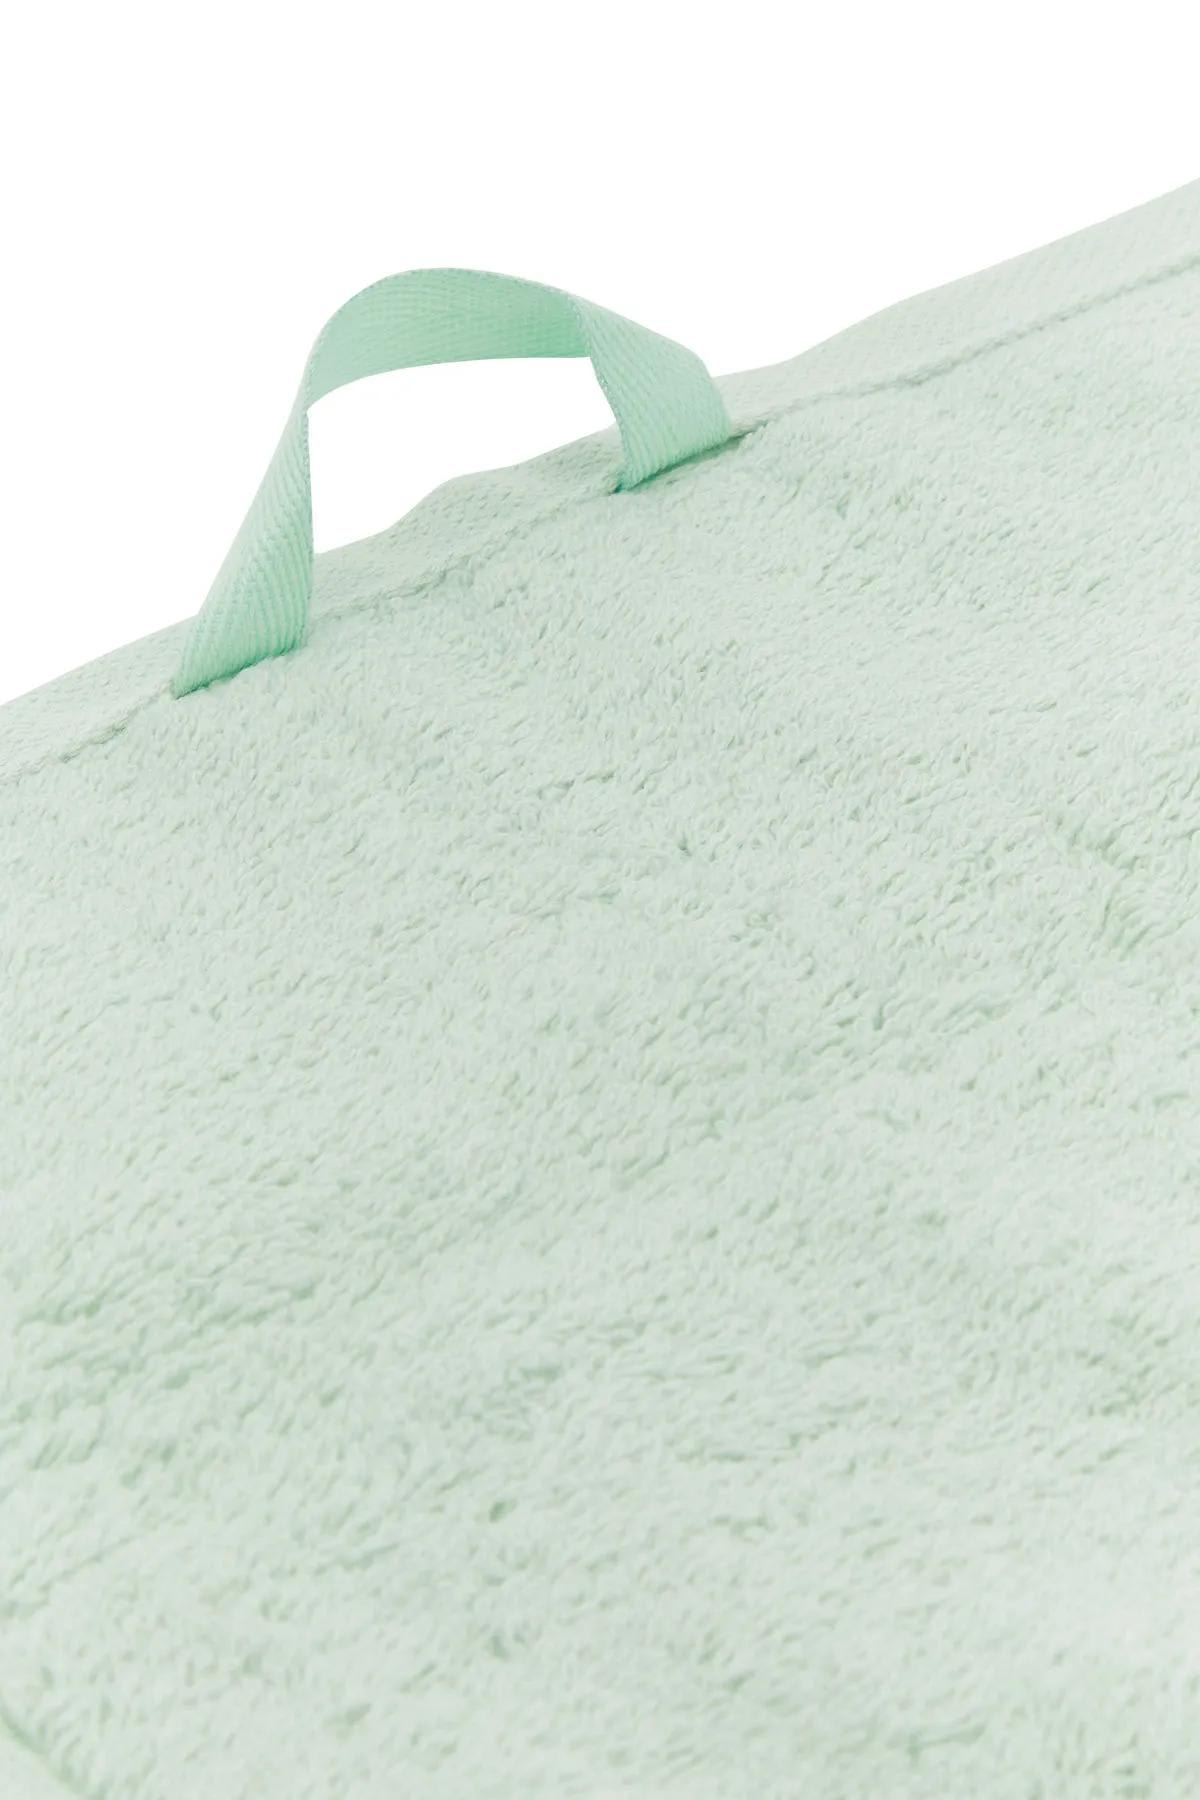 Shop Tekla Mint Green Terry Towel